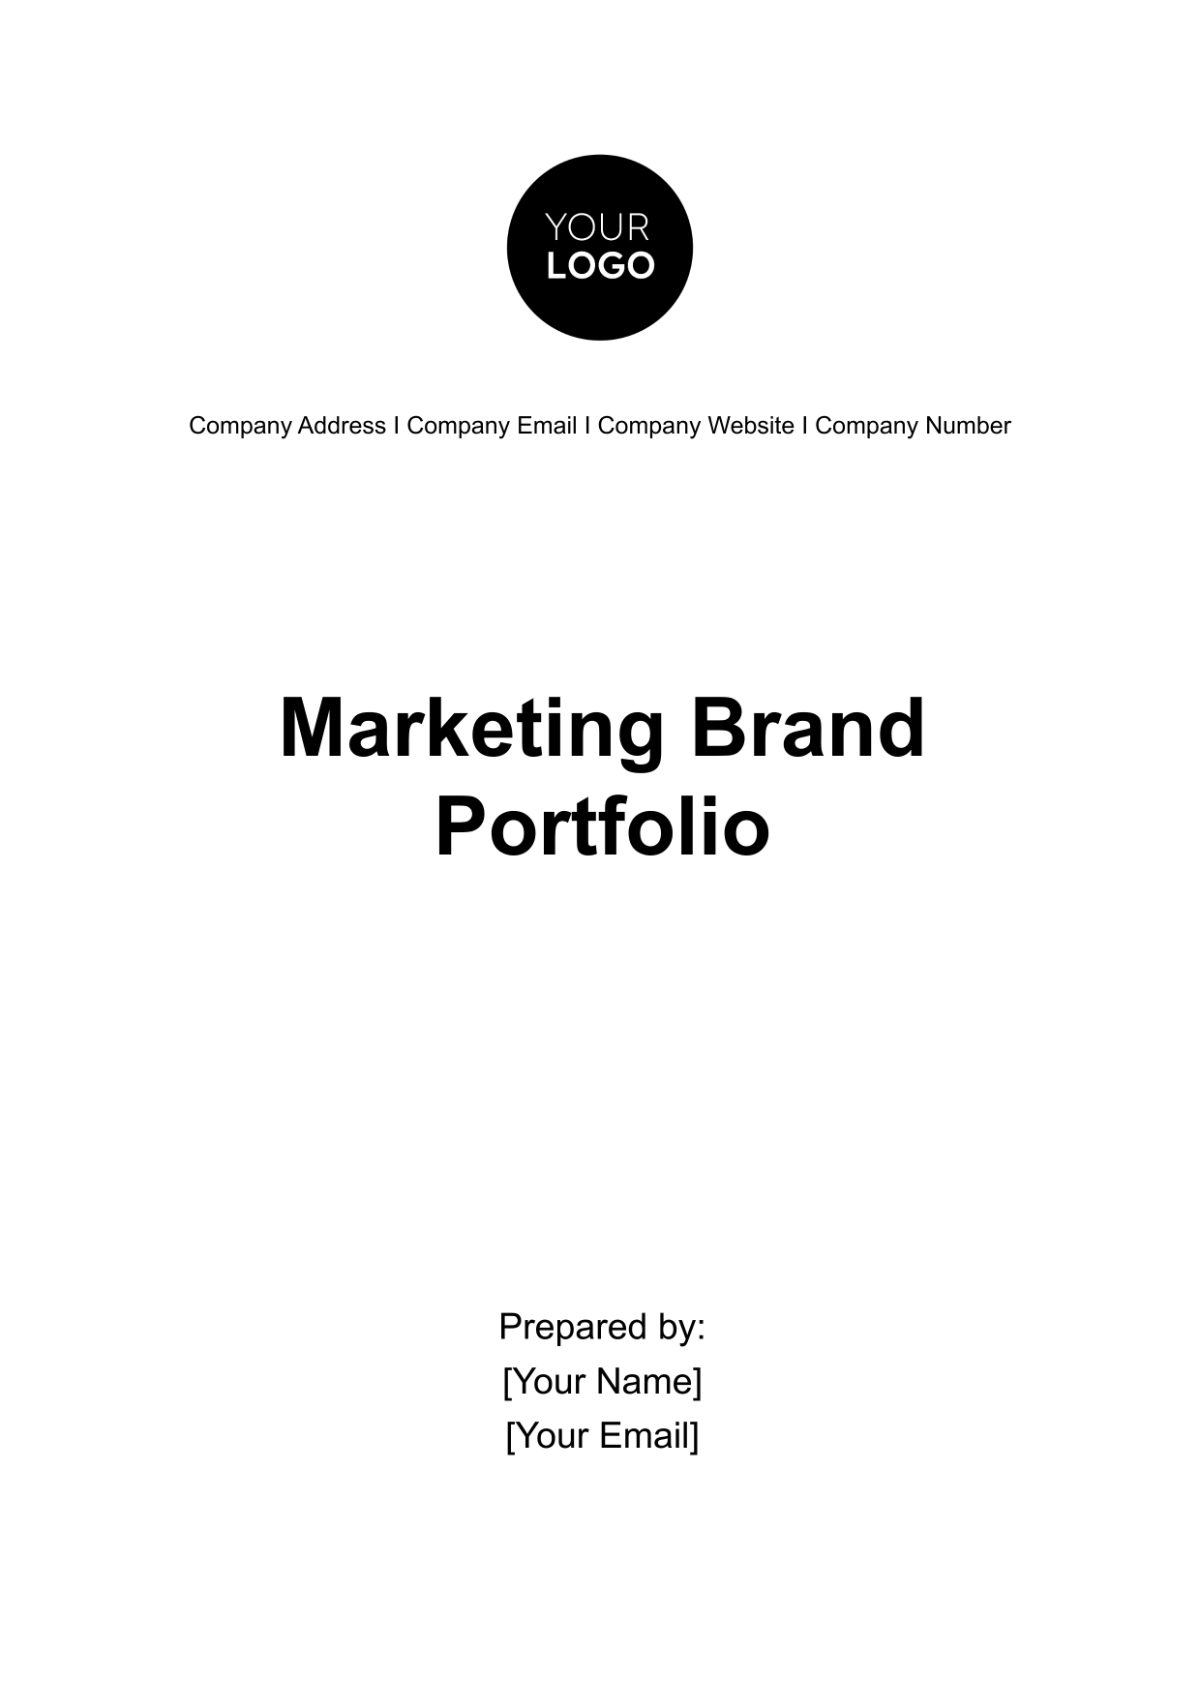 Marketing Brand Portfolio Template